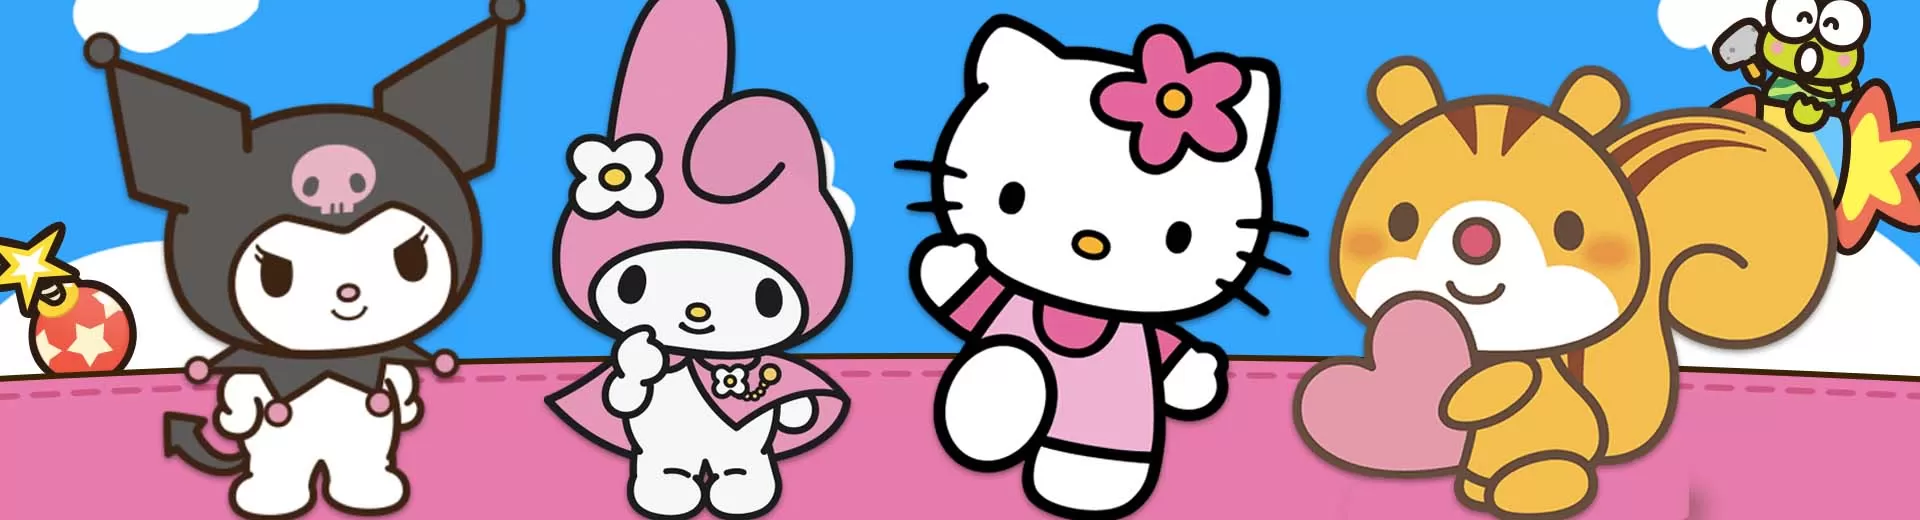 Hello Kitty Friends Emulator Pc